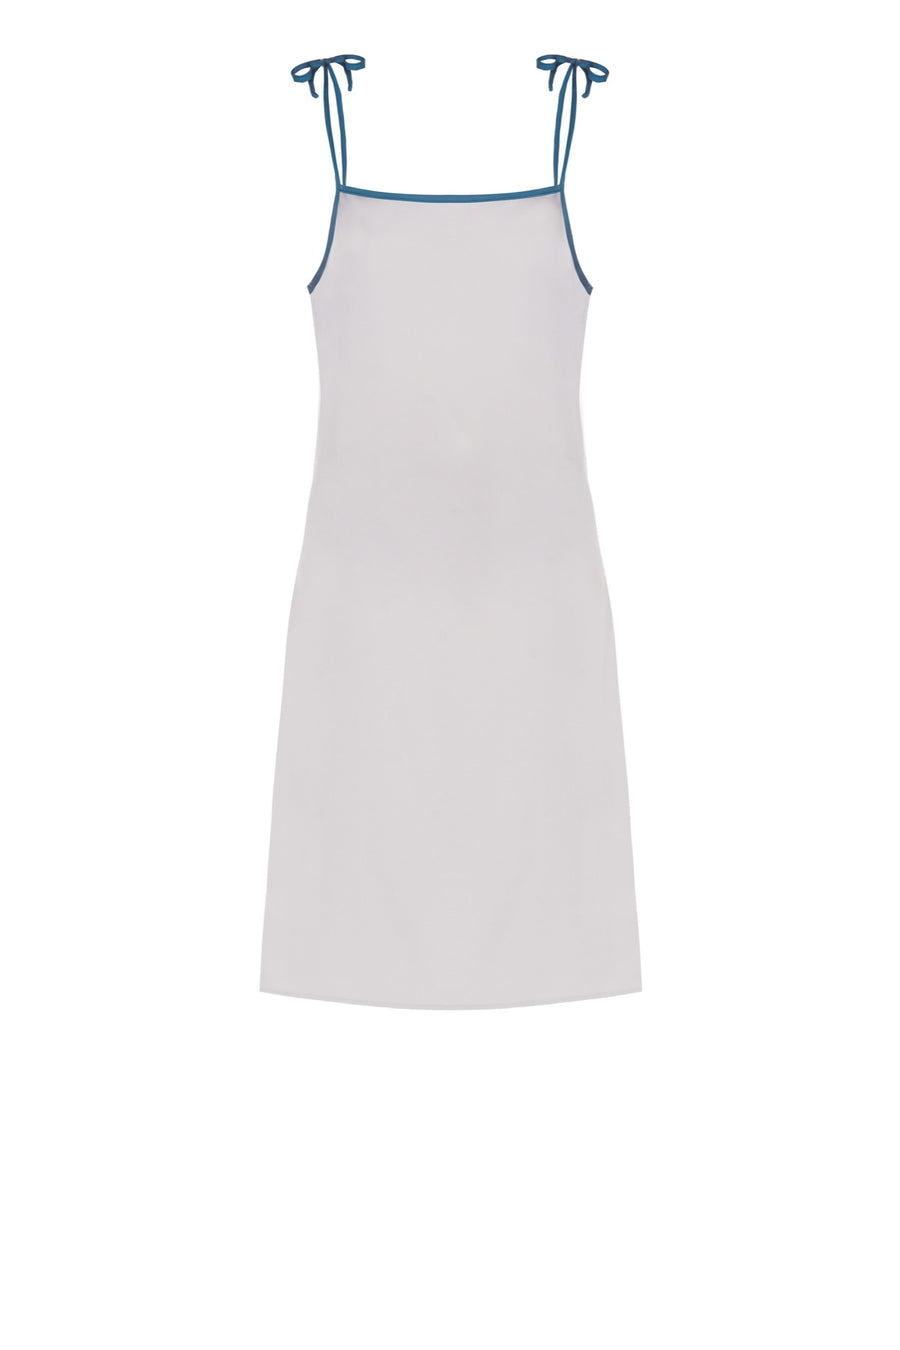 Women's loungewear - white and blue slip dress